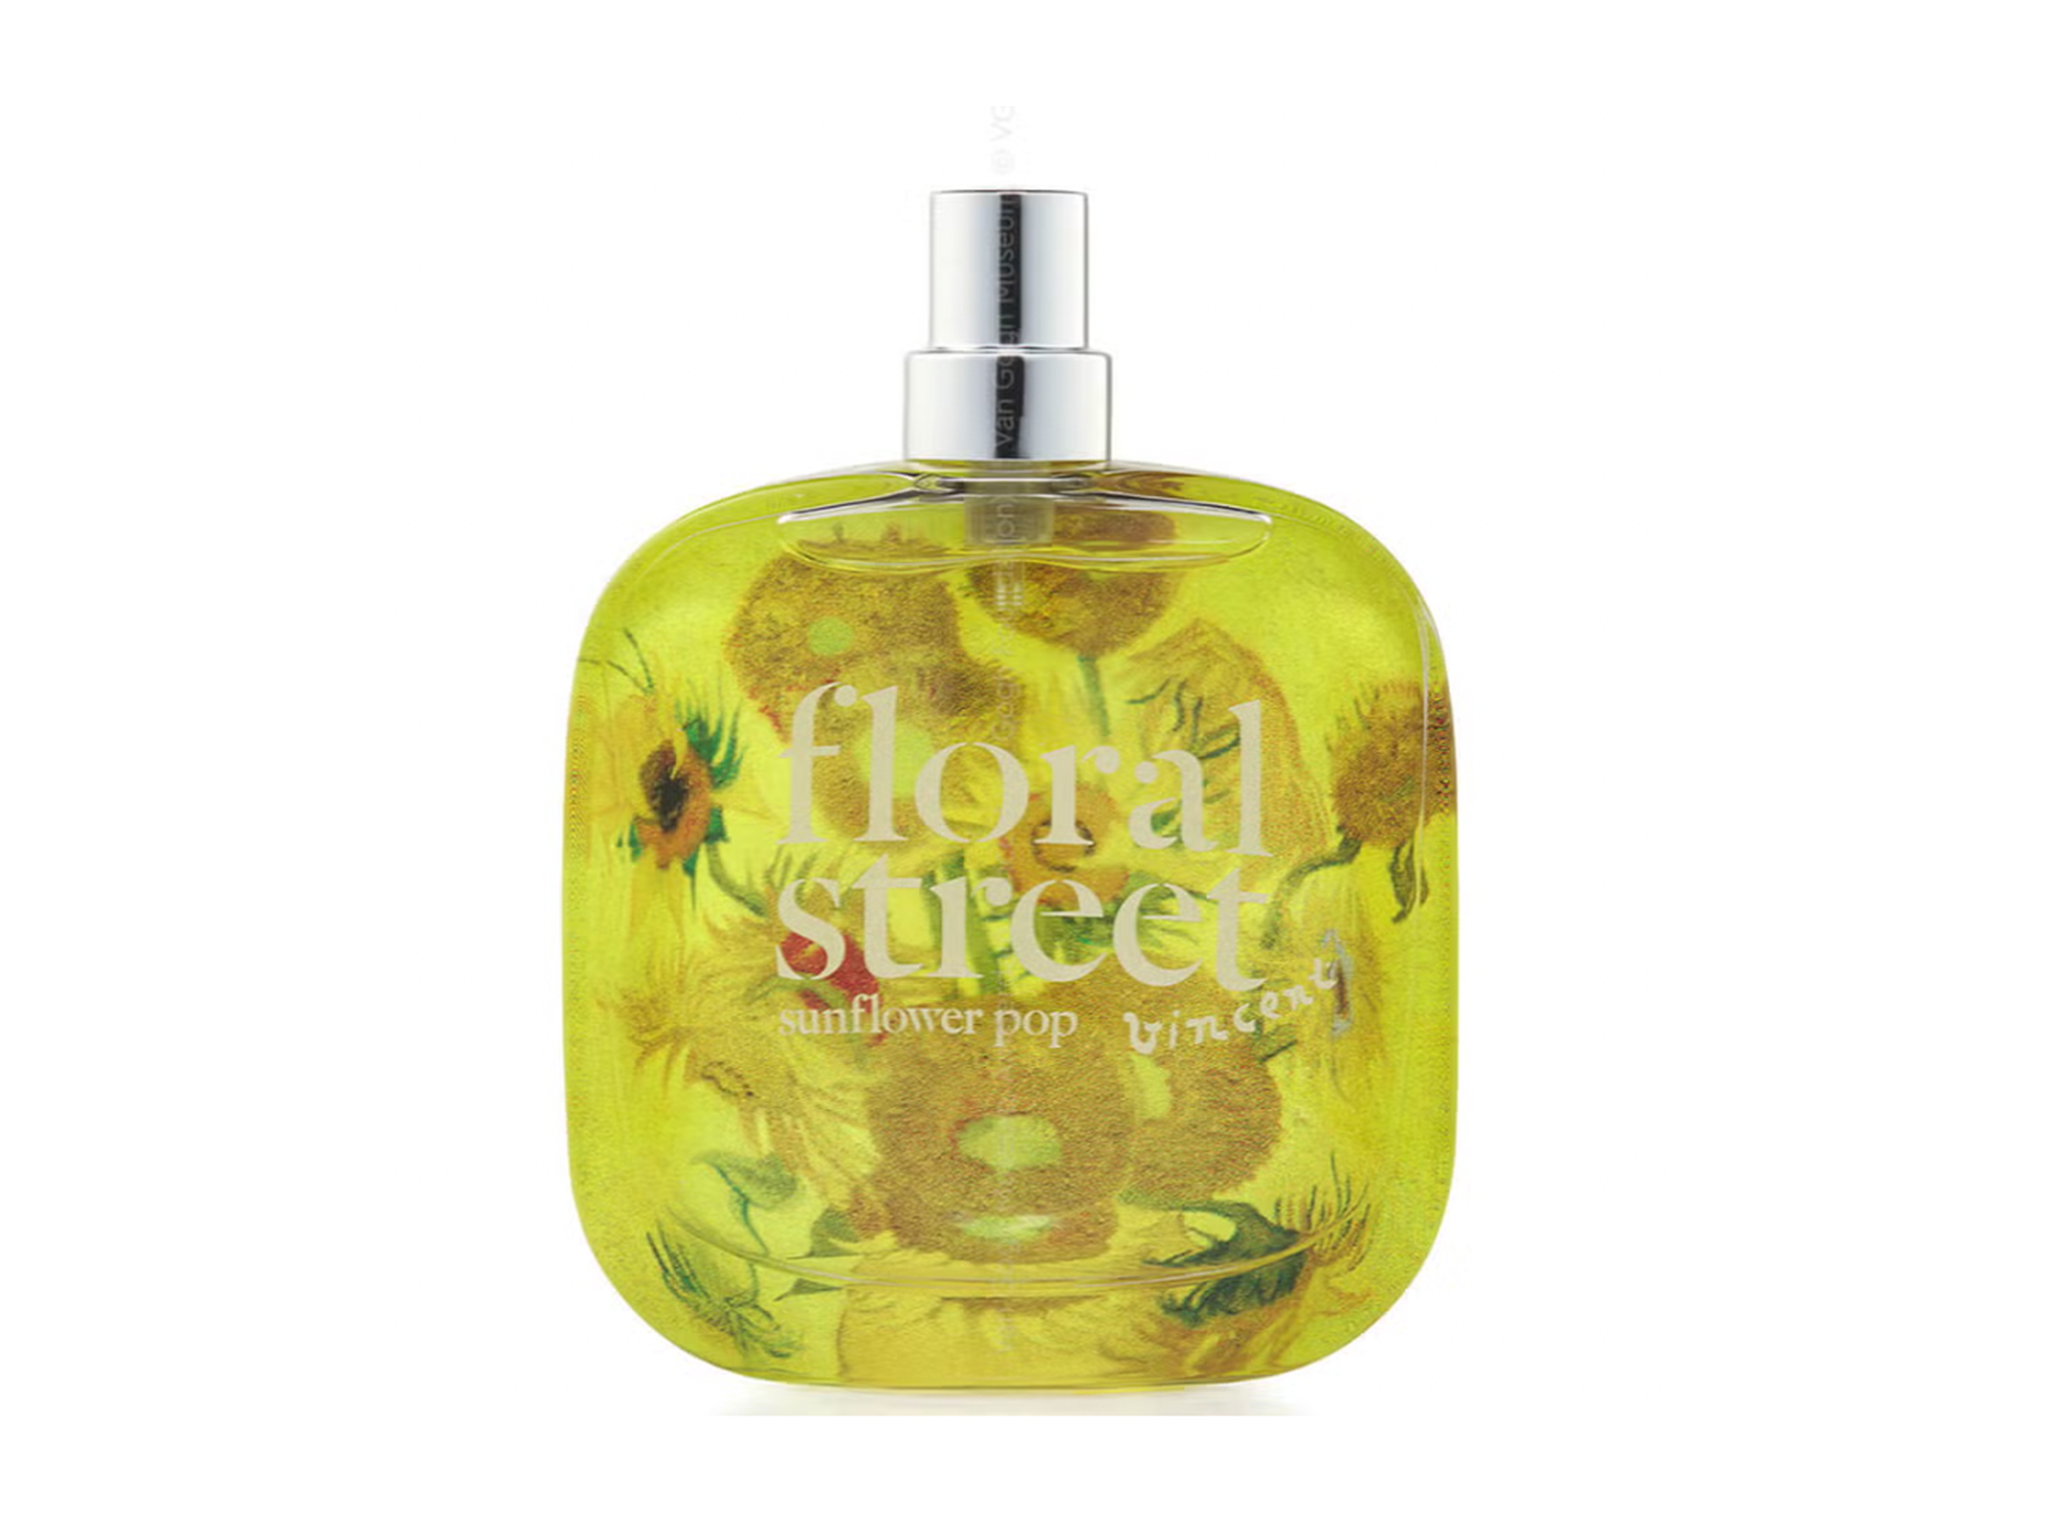 Floral Street sunflower pop eau de parfum-indybest